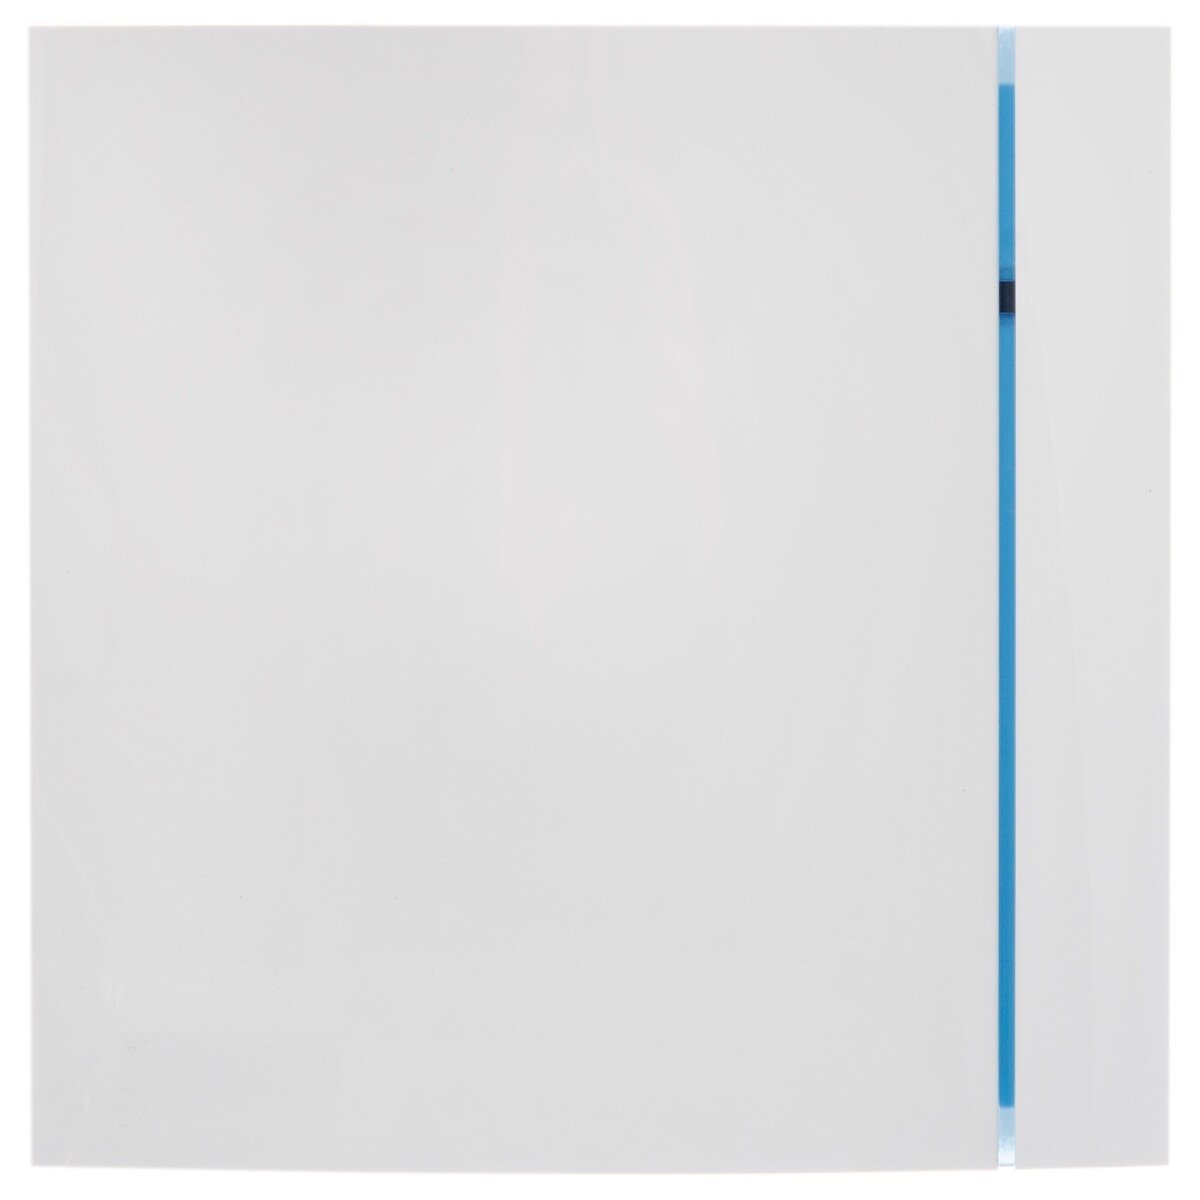 Вентилятор Soler & Palau Silent Design 100 CZ Matt White Blue strip (Голубая полоска)